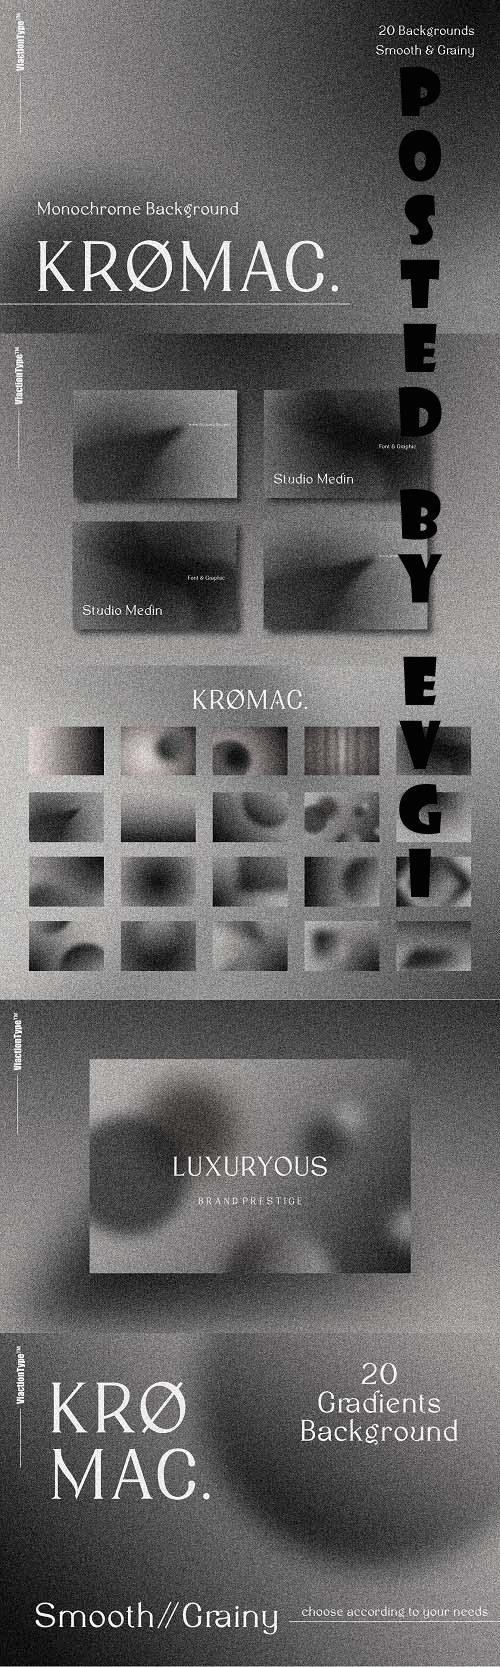 Kromac - Monochrome Background - 6580217